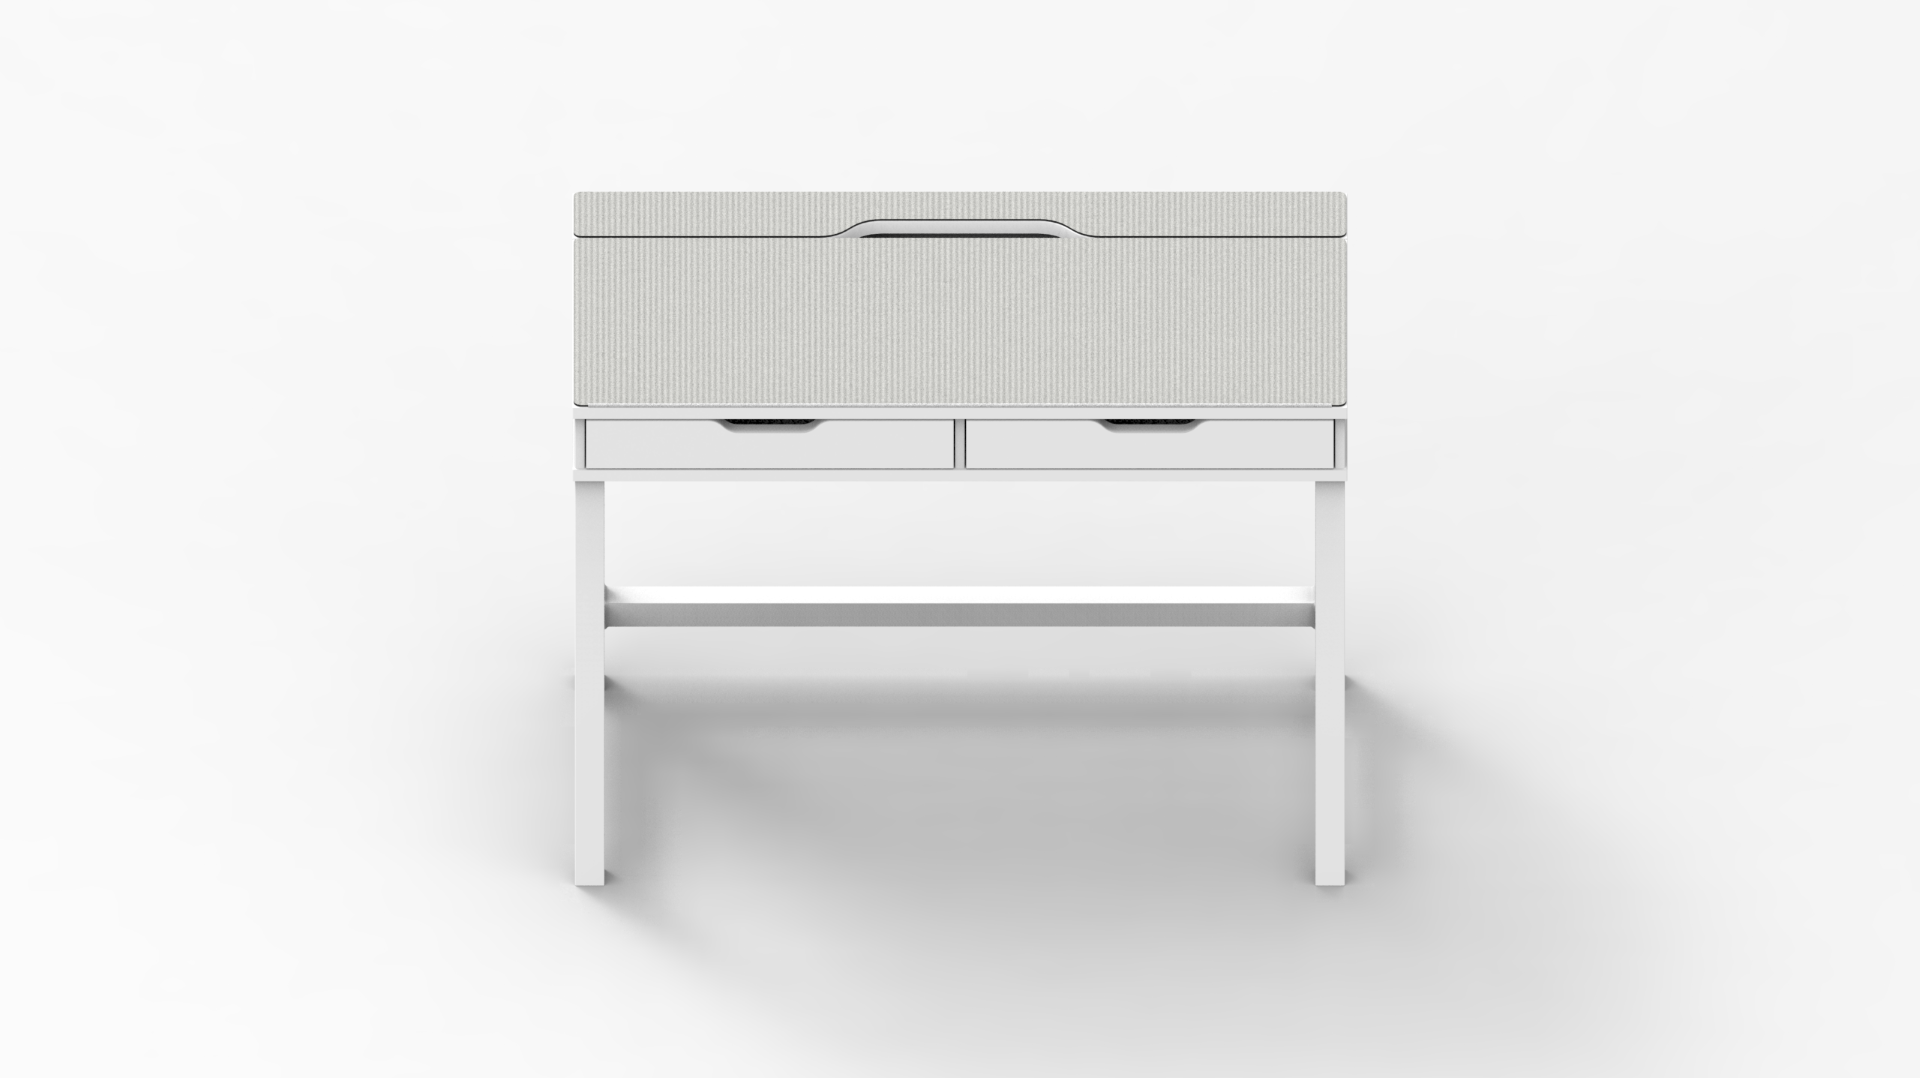 MK White IKEA ALEX Desk Mat (39" / 100 cm) Full-desk Mouse Pad MK0OYKLXLU |40165|